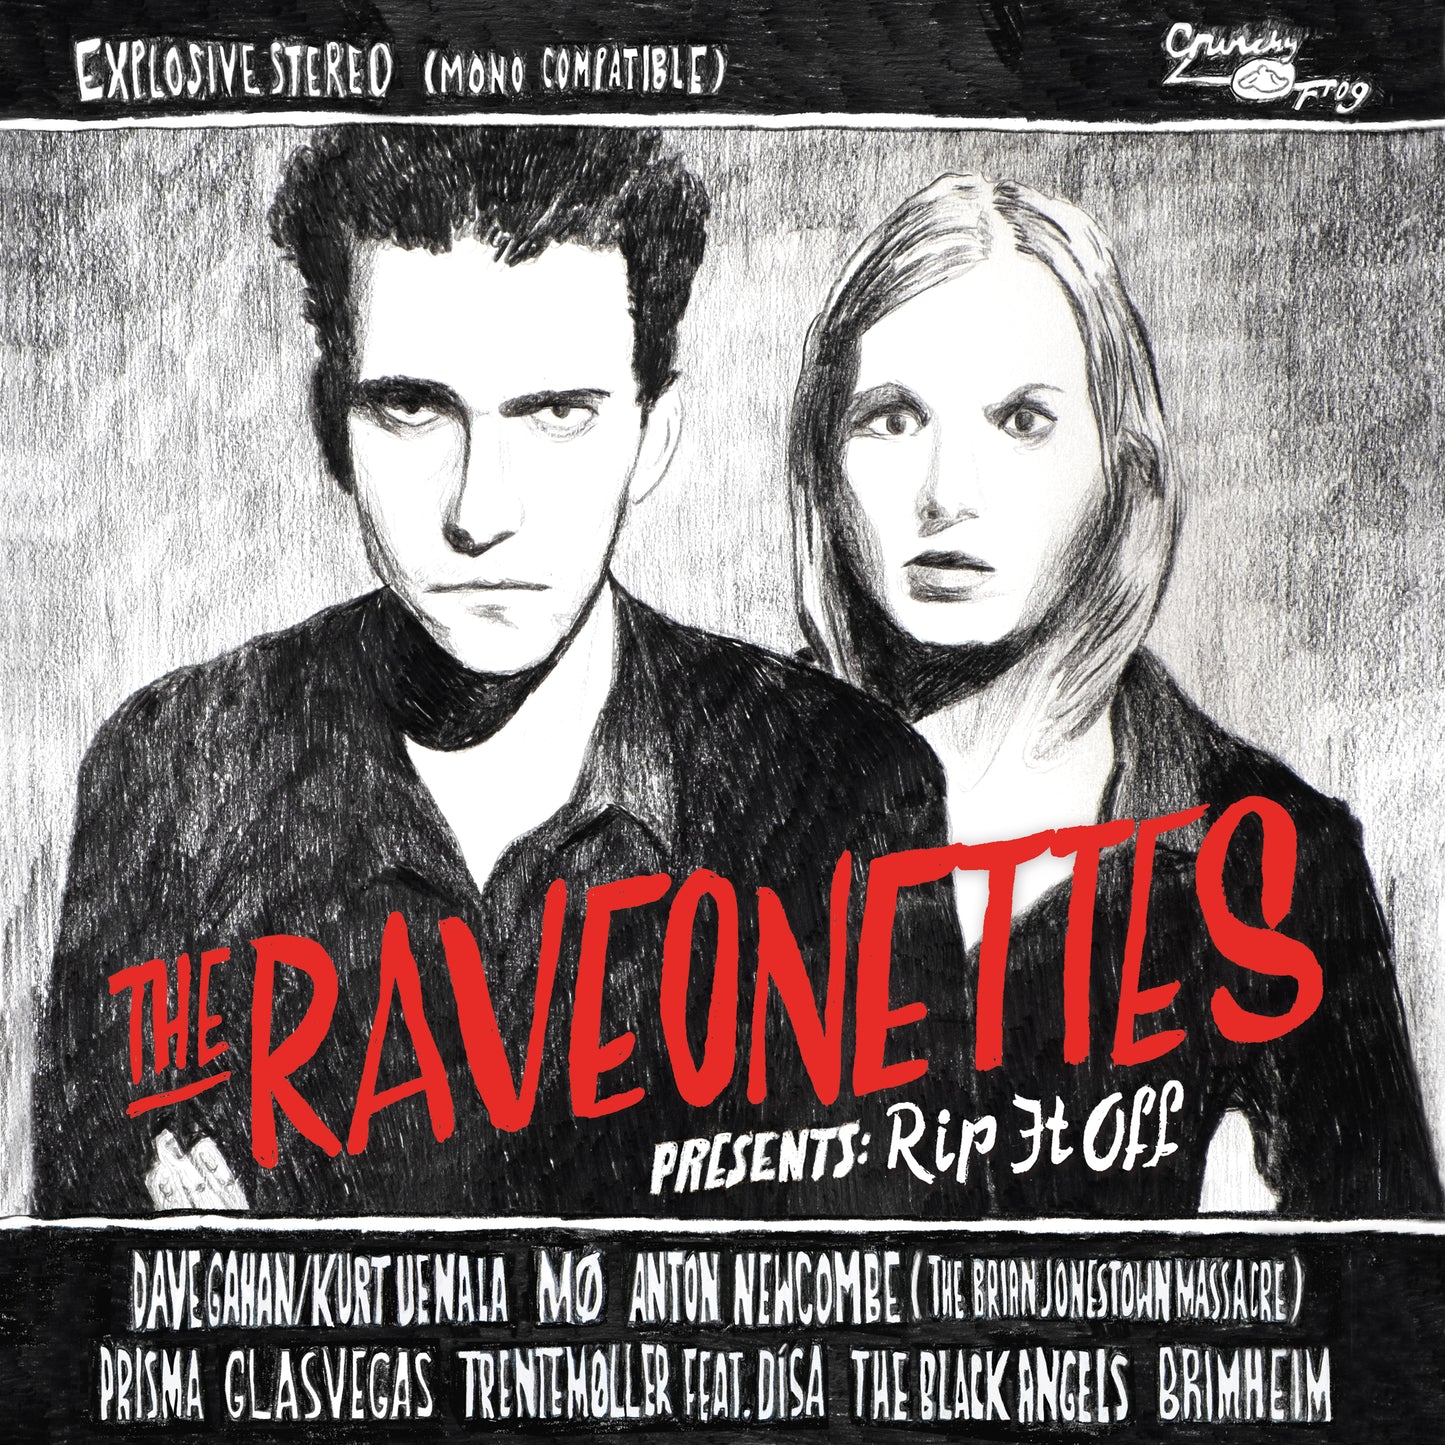 The Raveonettes "Presents : Rip It Off" LP